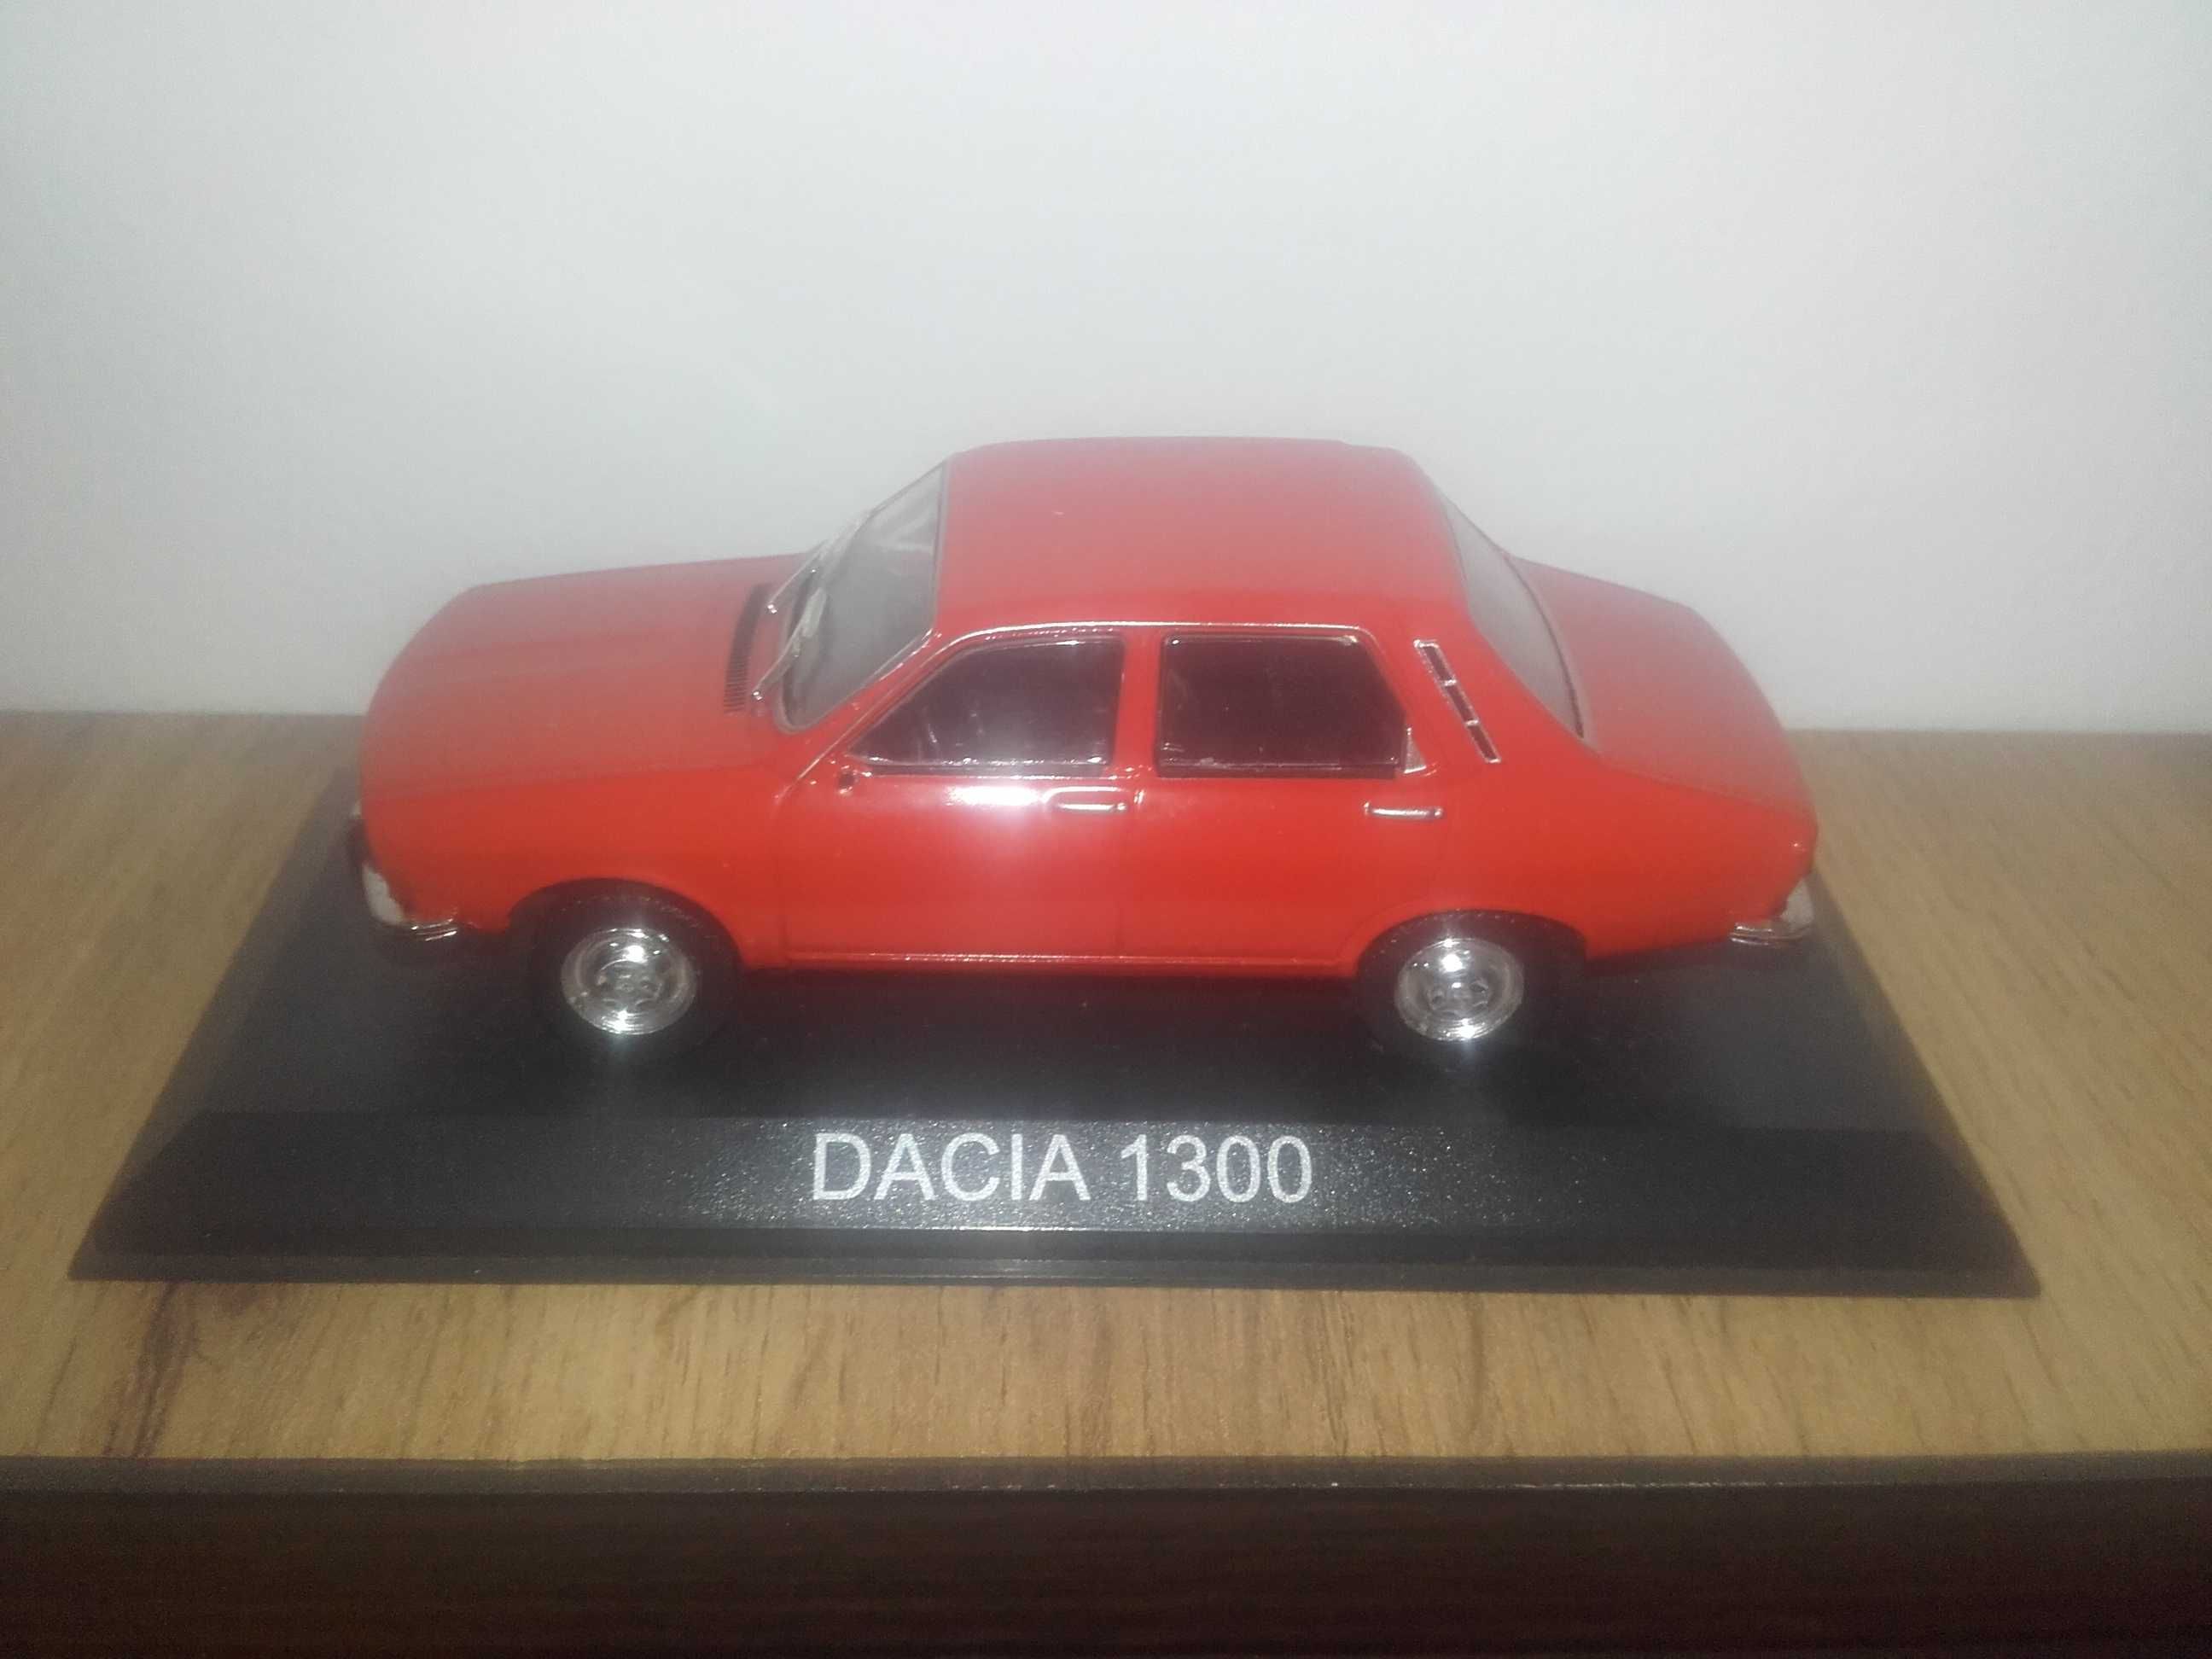 Macheta metalica scara 1:43 model Dacia 1300